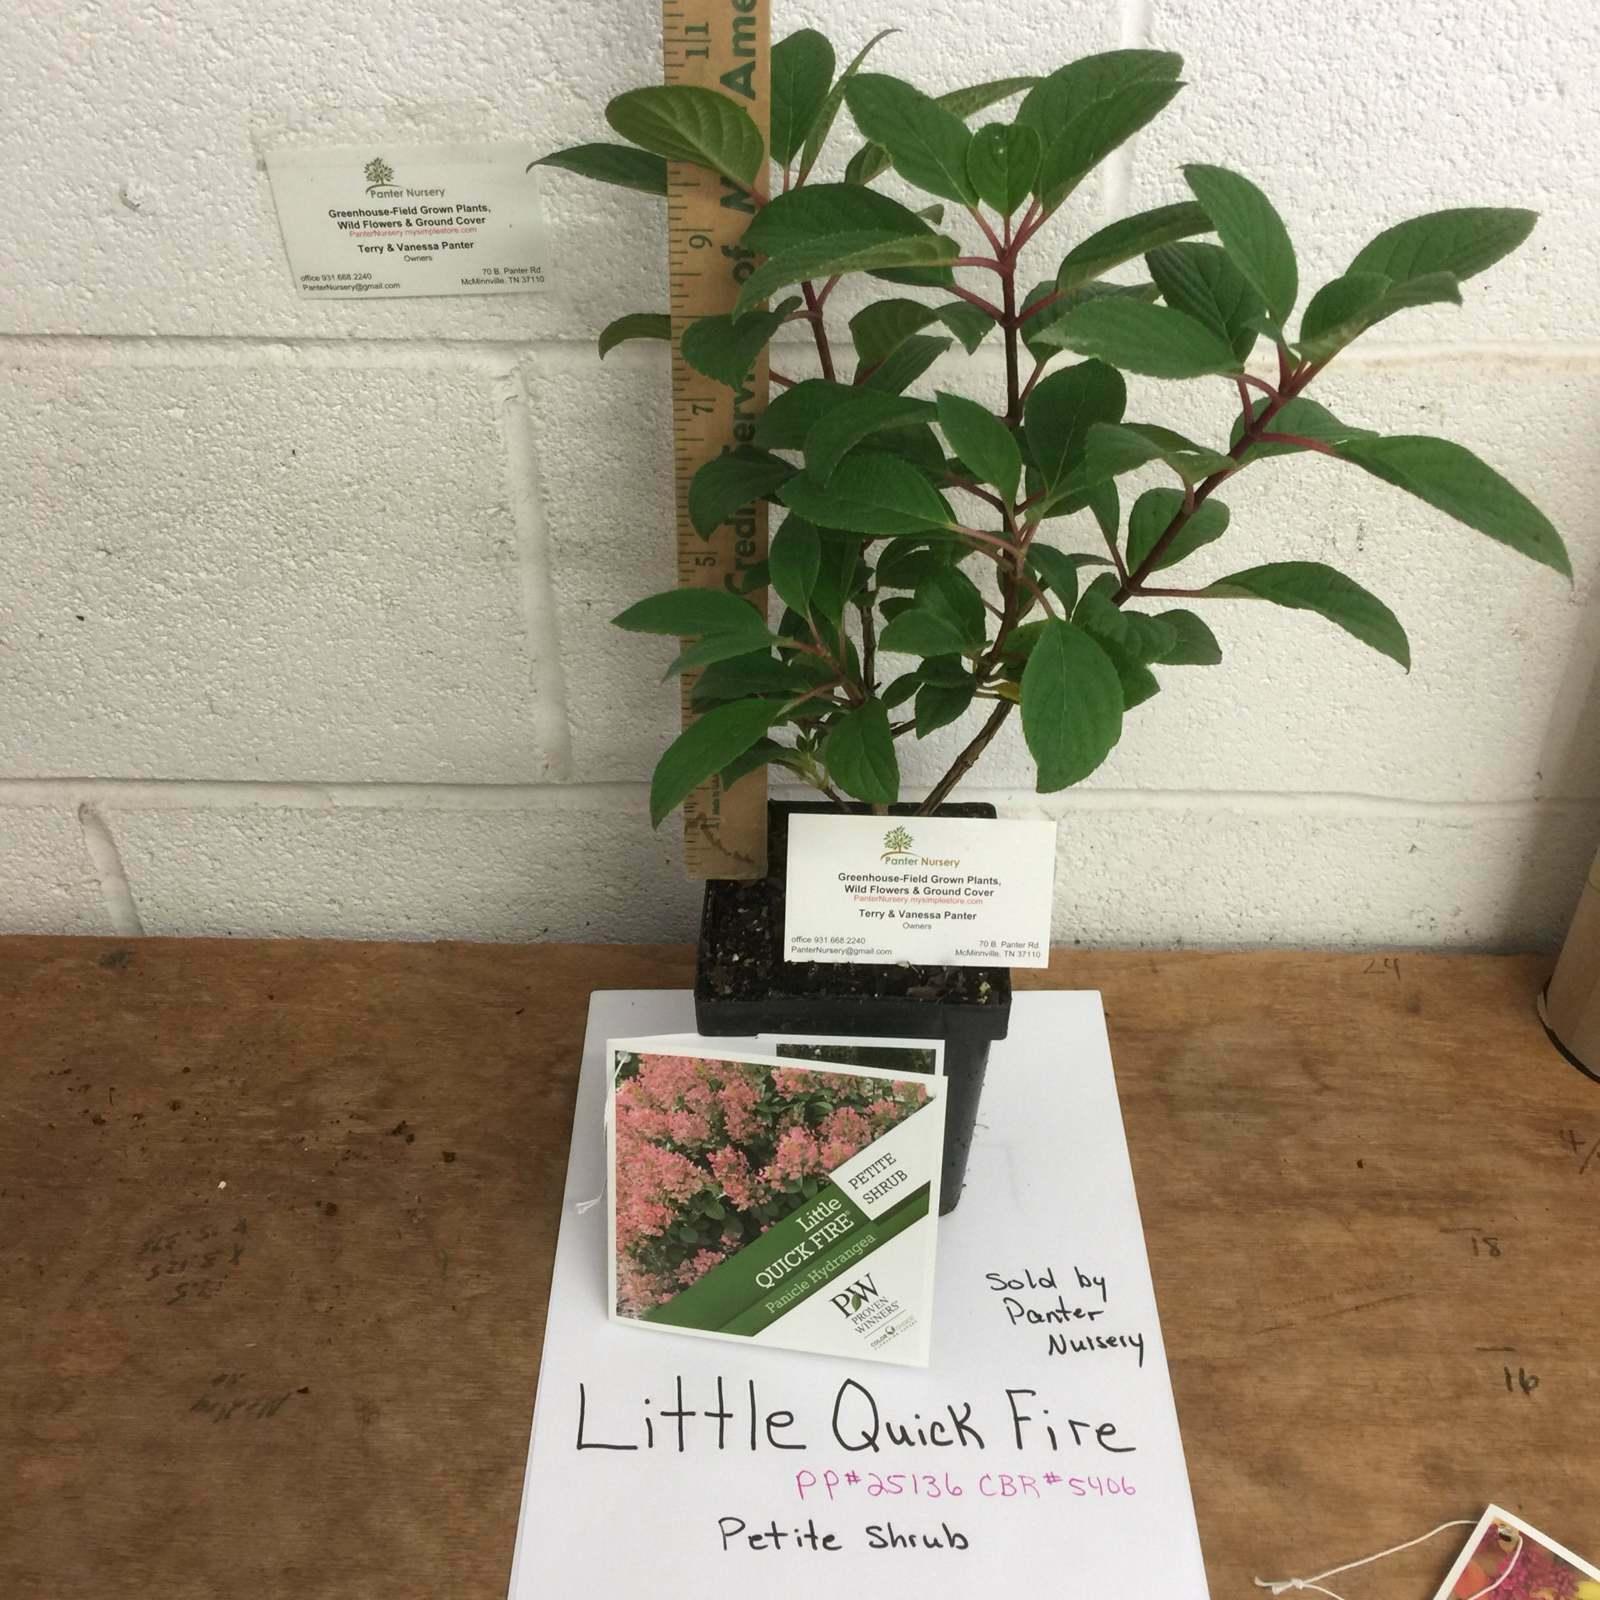 Little Quick Fire Panicle Hydrangea Petite Dwarf Shrub - 6-12" Tall - Quart Pot - The Nursery Center